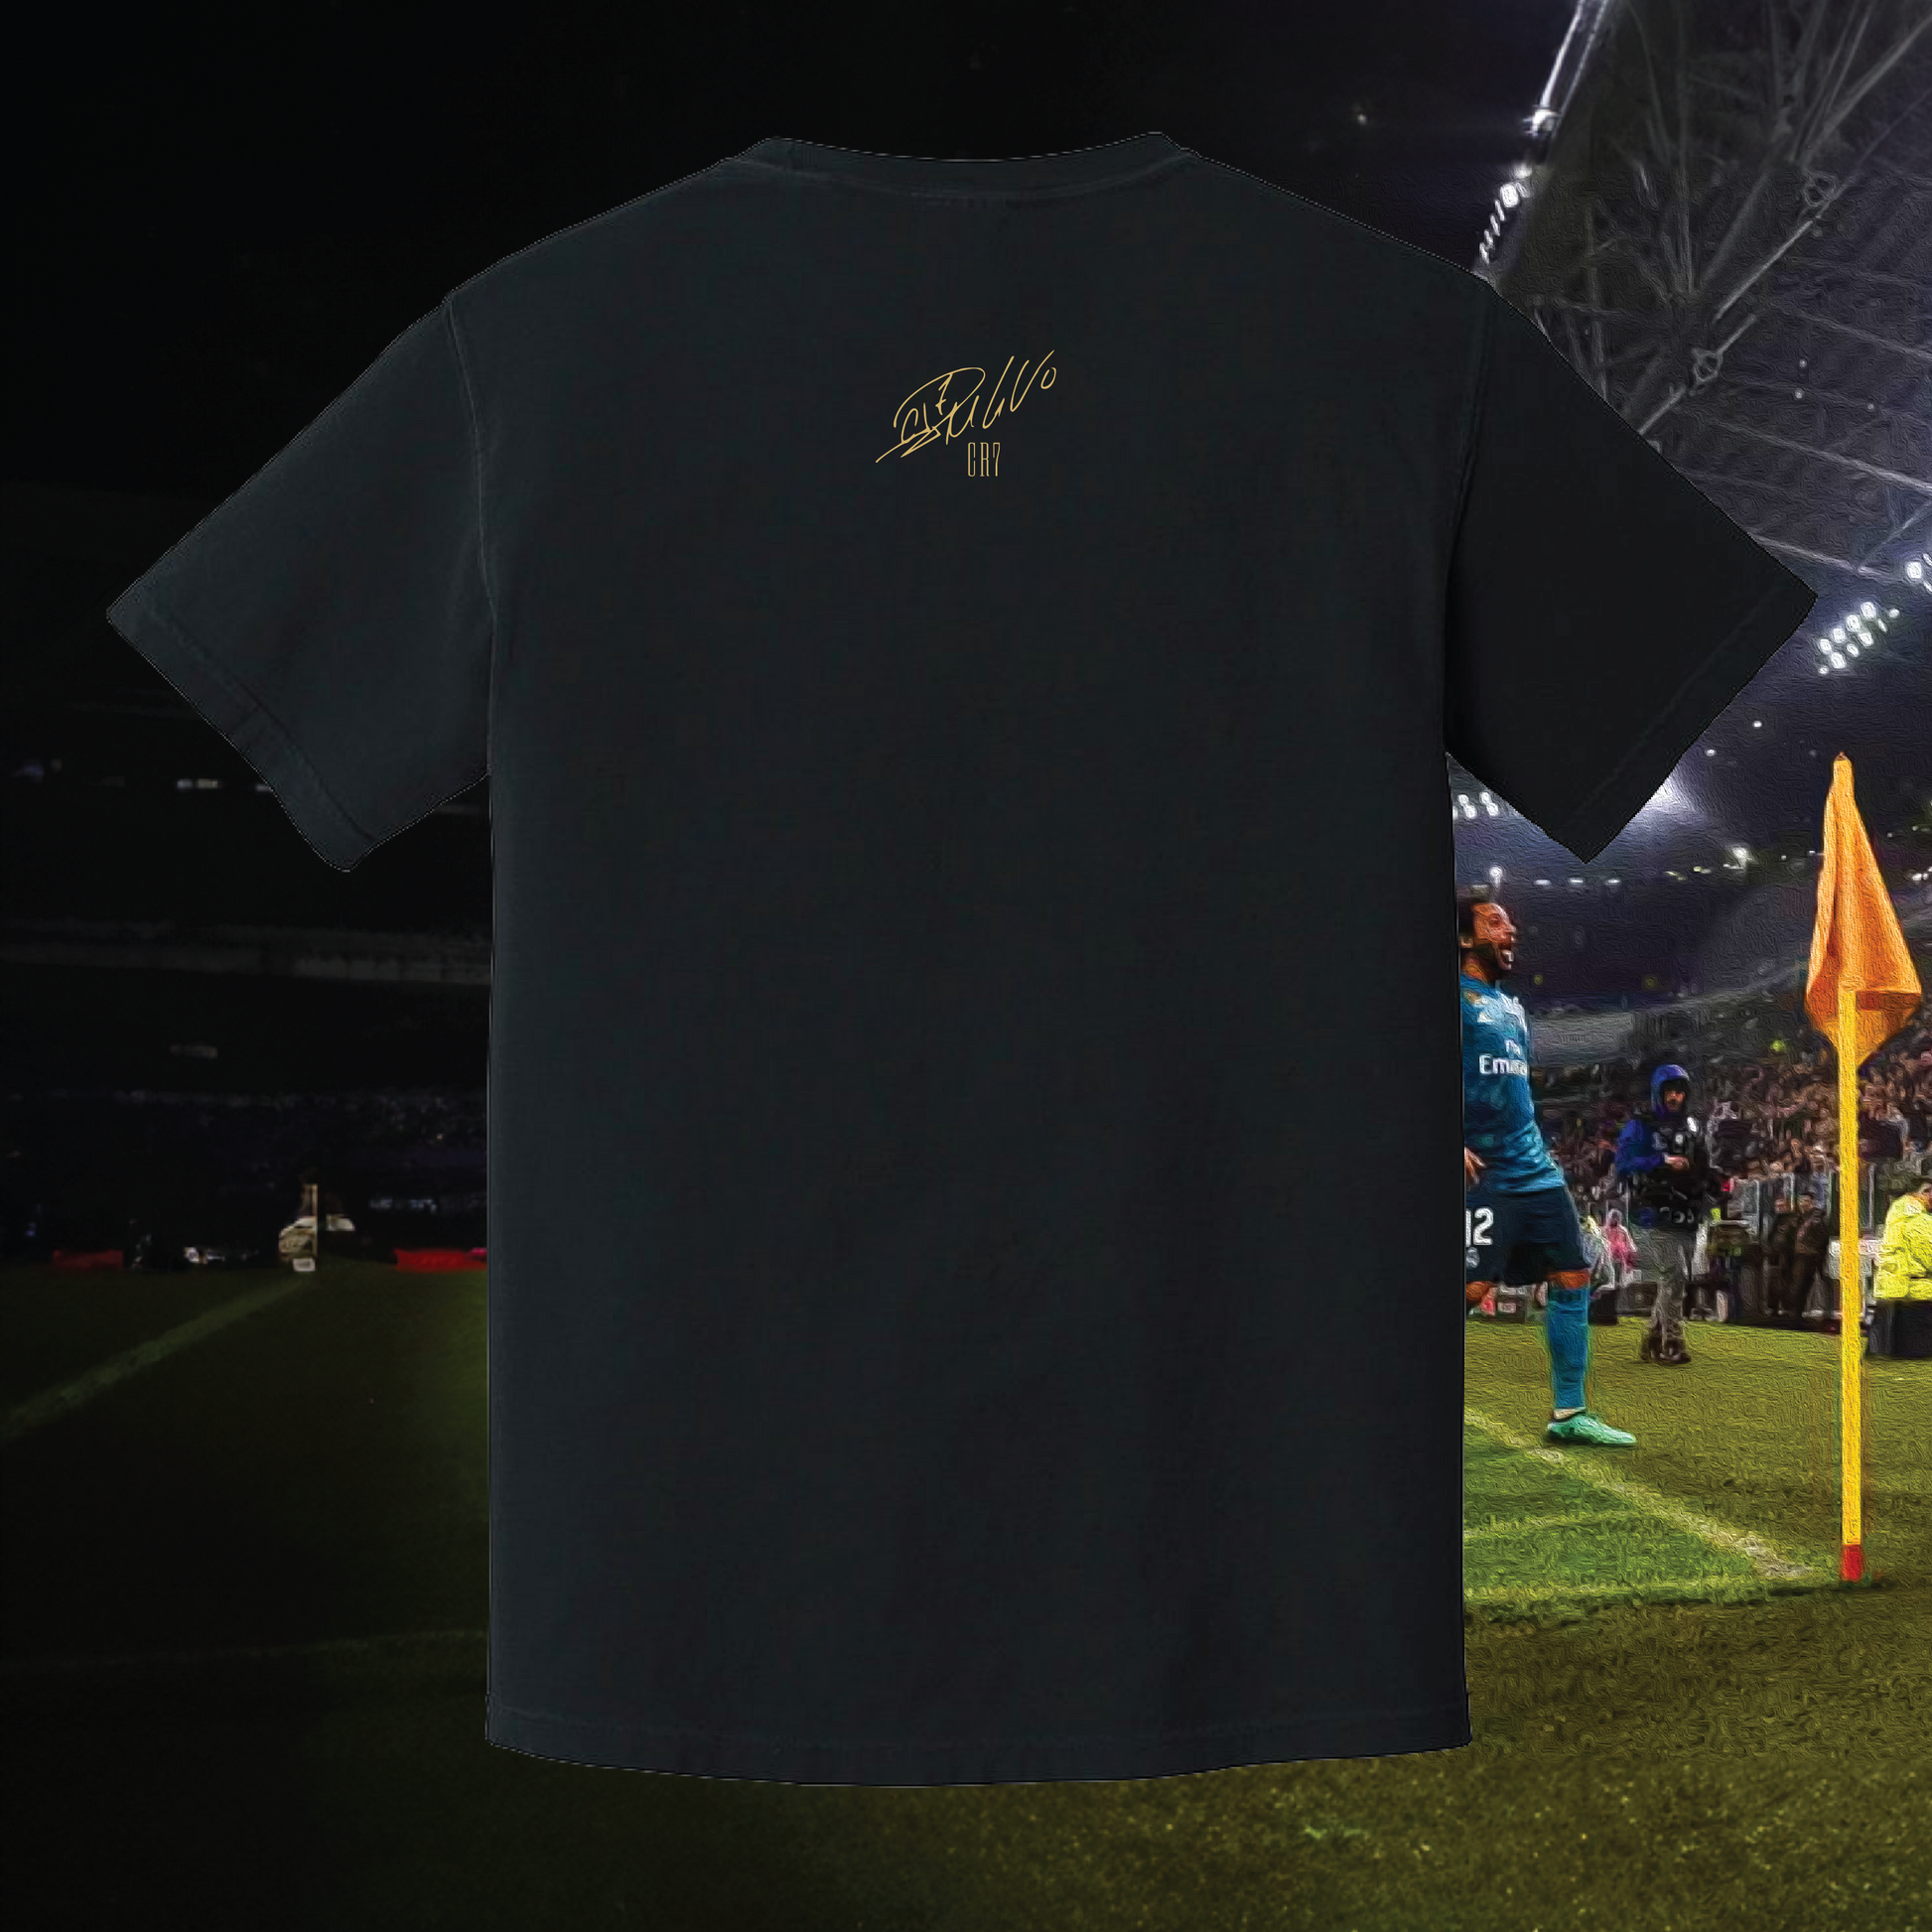 Official vintage Stuff Camiseta Cristiano Ronaldo T Shirt - Limotees